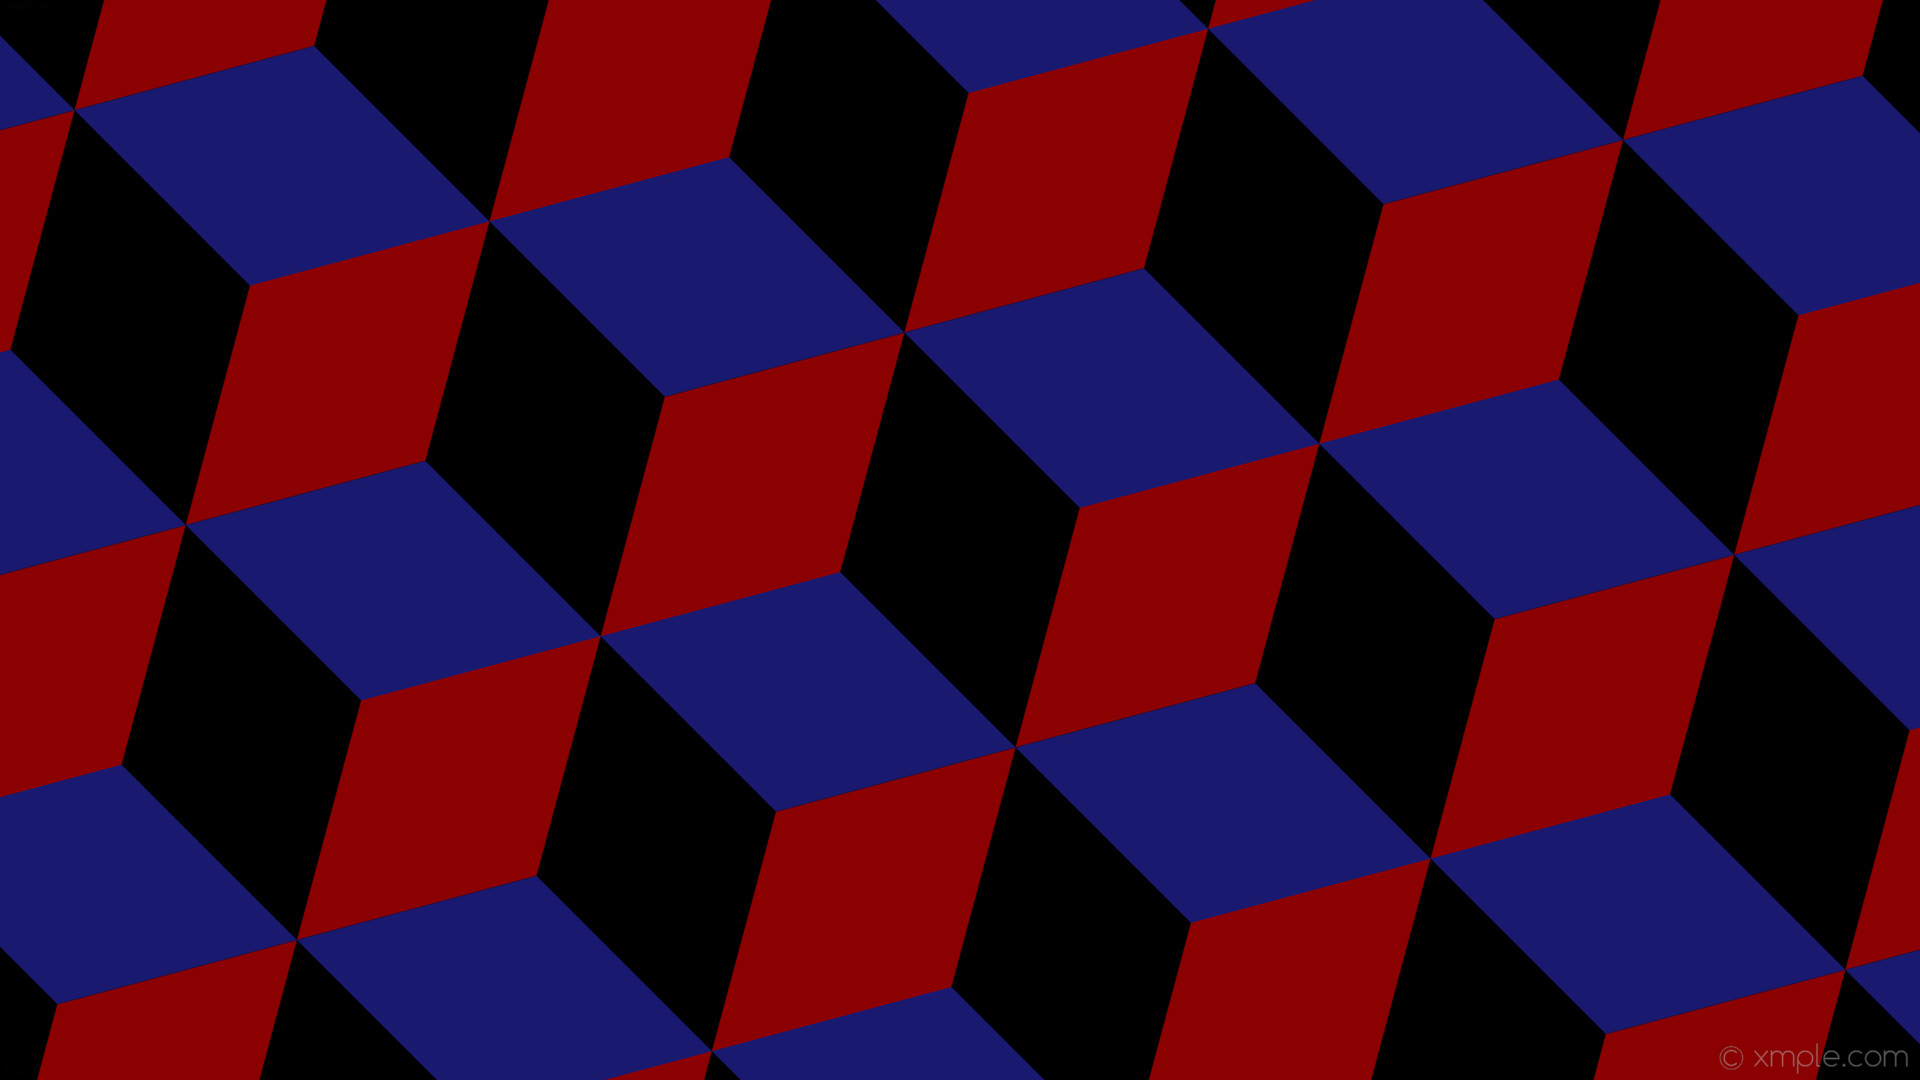 1920x1080 wallpaper red 3d cubes blue black dark red midnight blue #000000 #8b0000  #191970